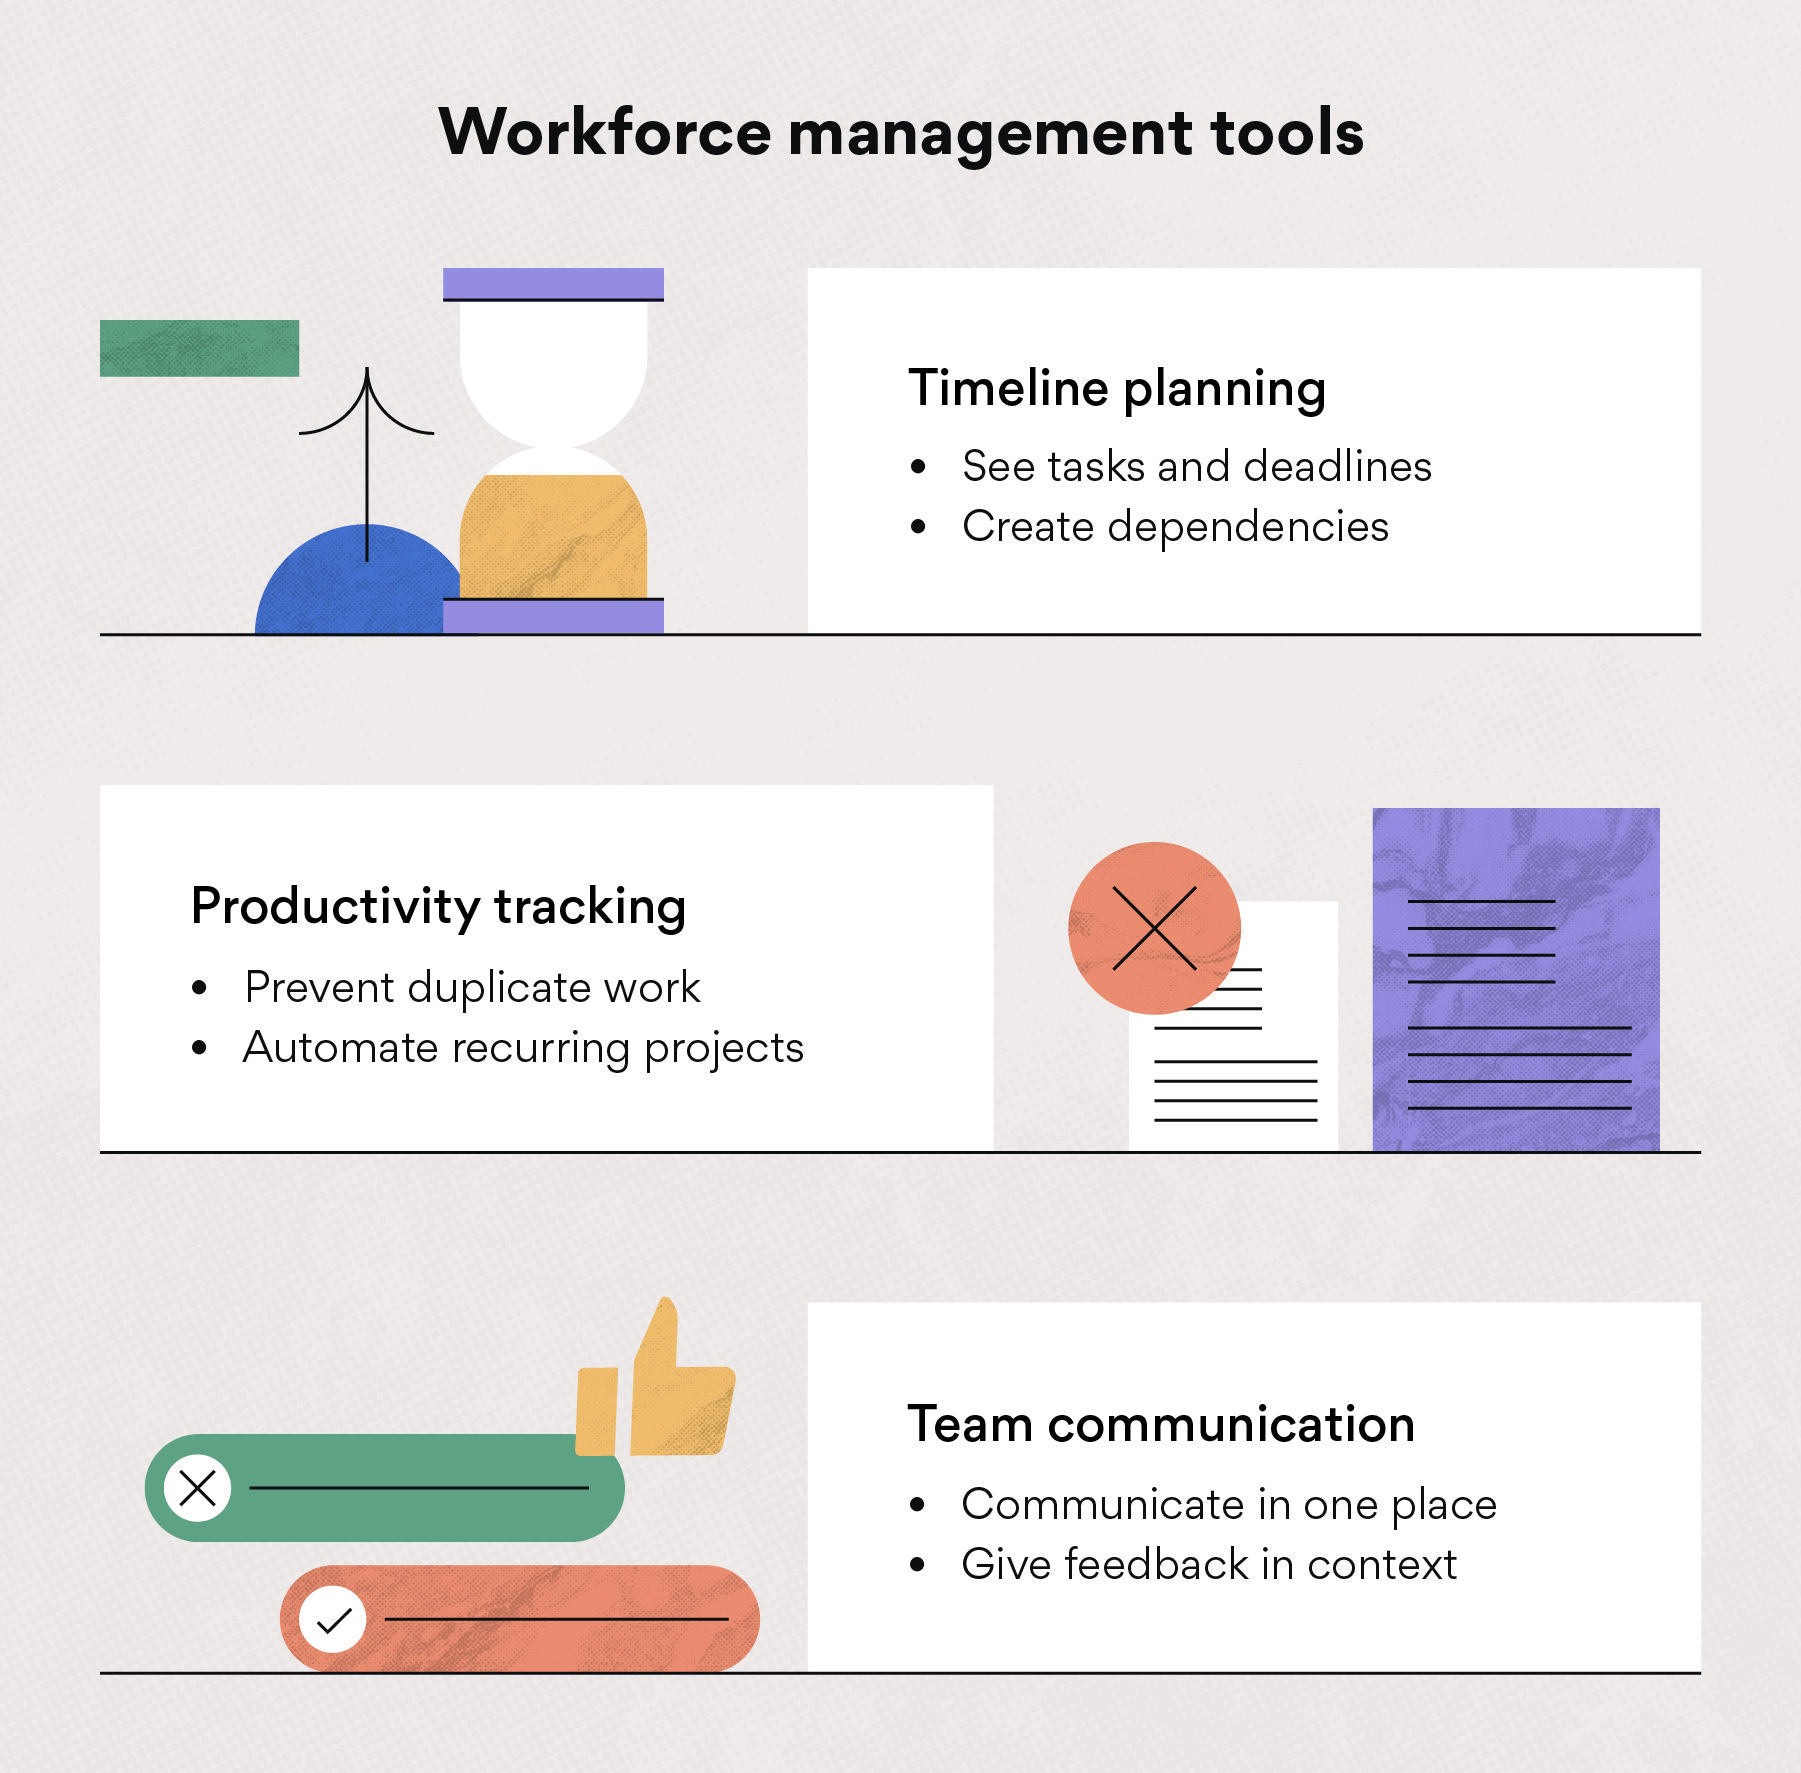 Workforce management tools